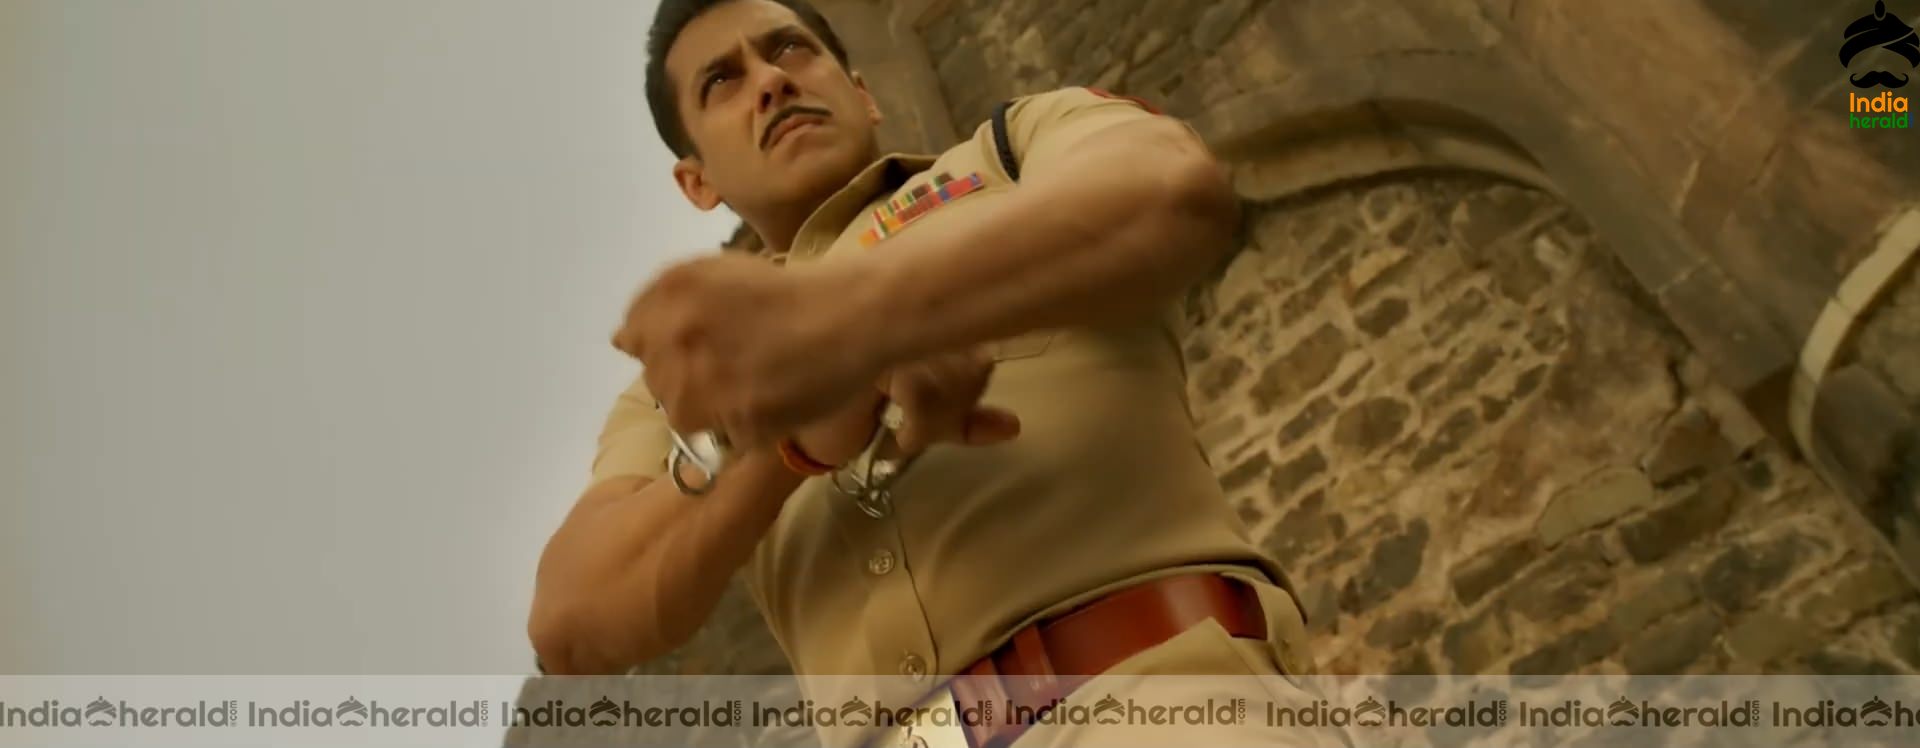 Salman Khan in Dabaang 3 Trailer HD Stills Set 1